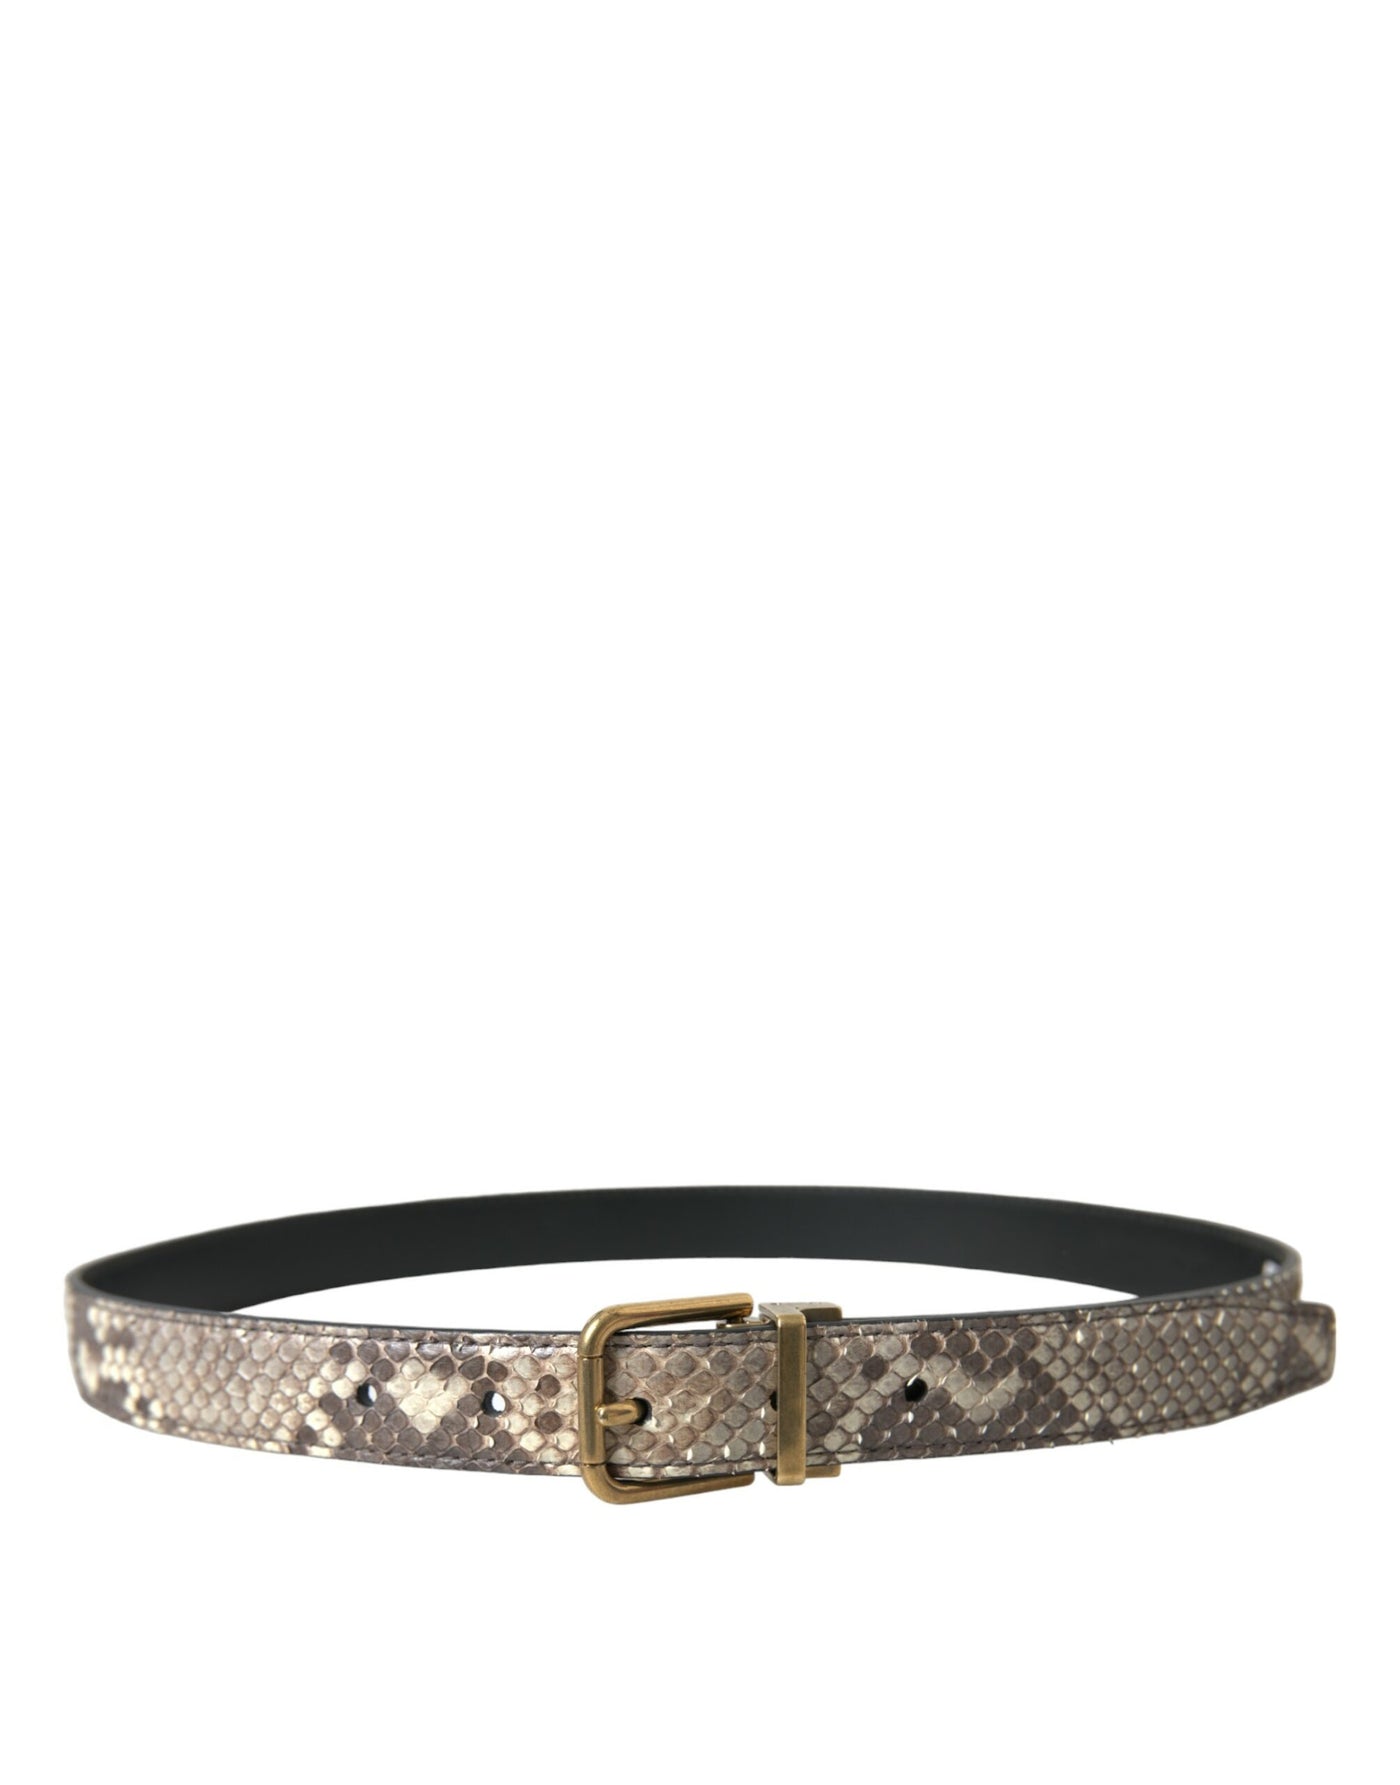 Dolce & Gabbana Brown Python Leather Gold Metal Buckle Belt